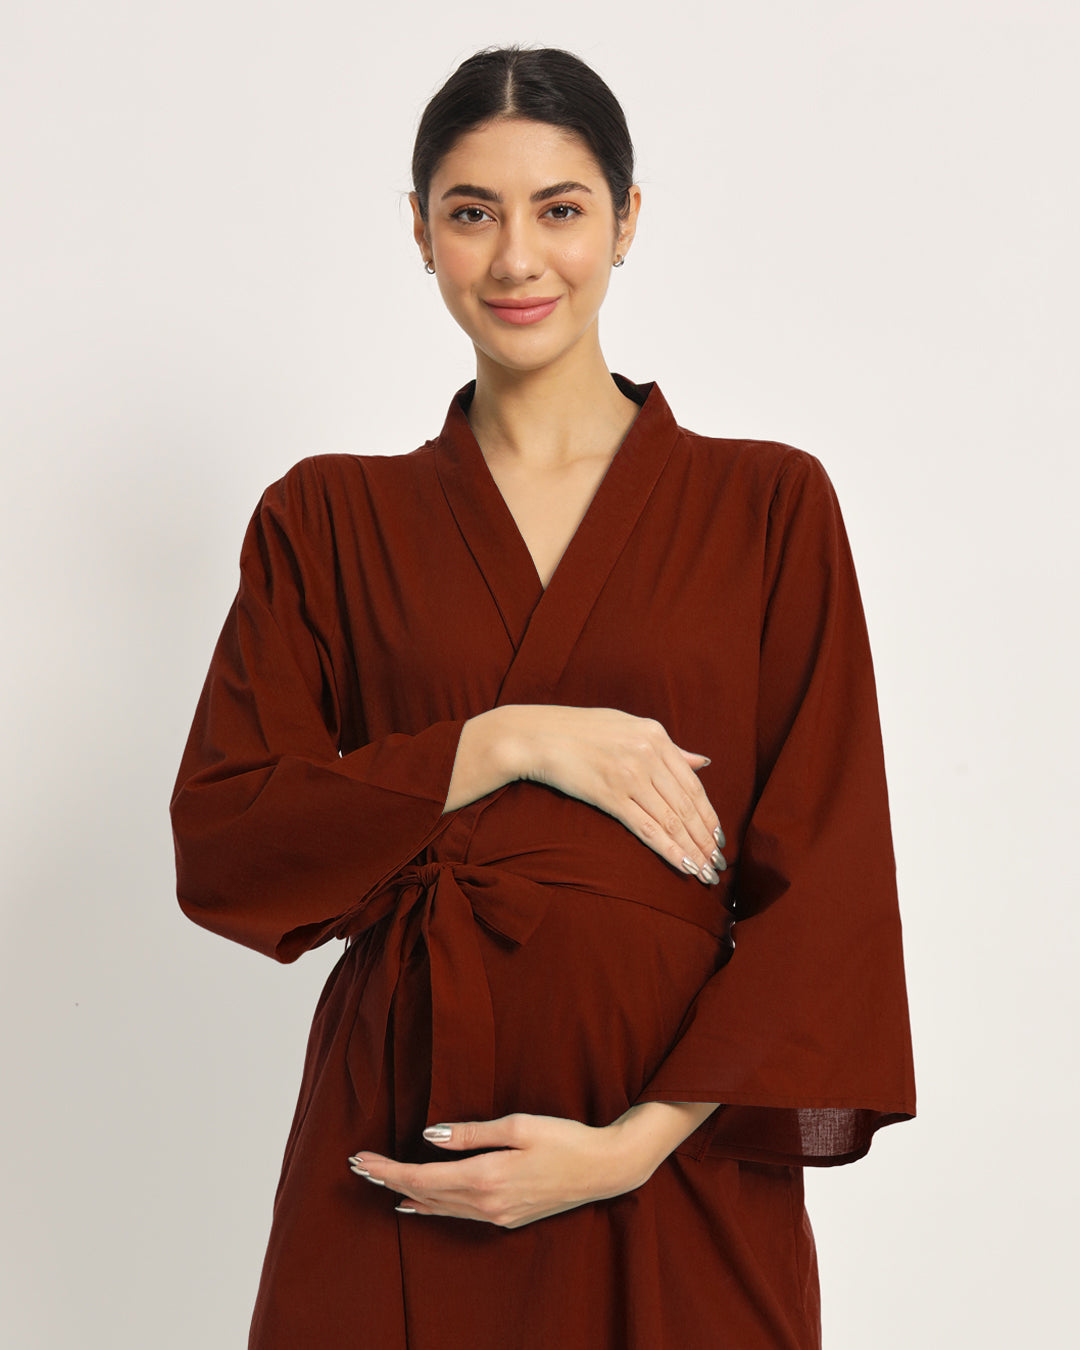 Russet Red Bump & Beyond Maternity & Nursing Dress